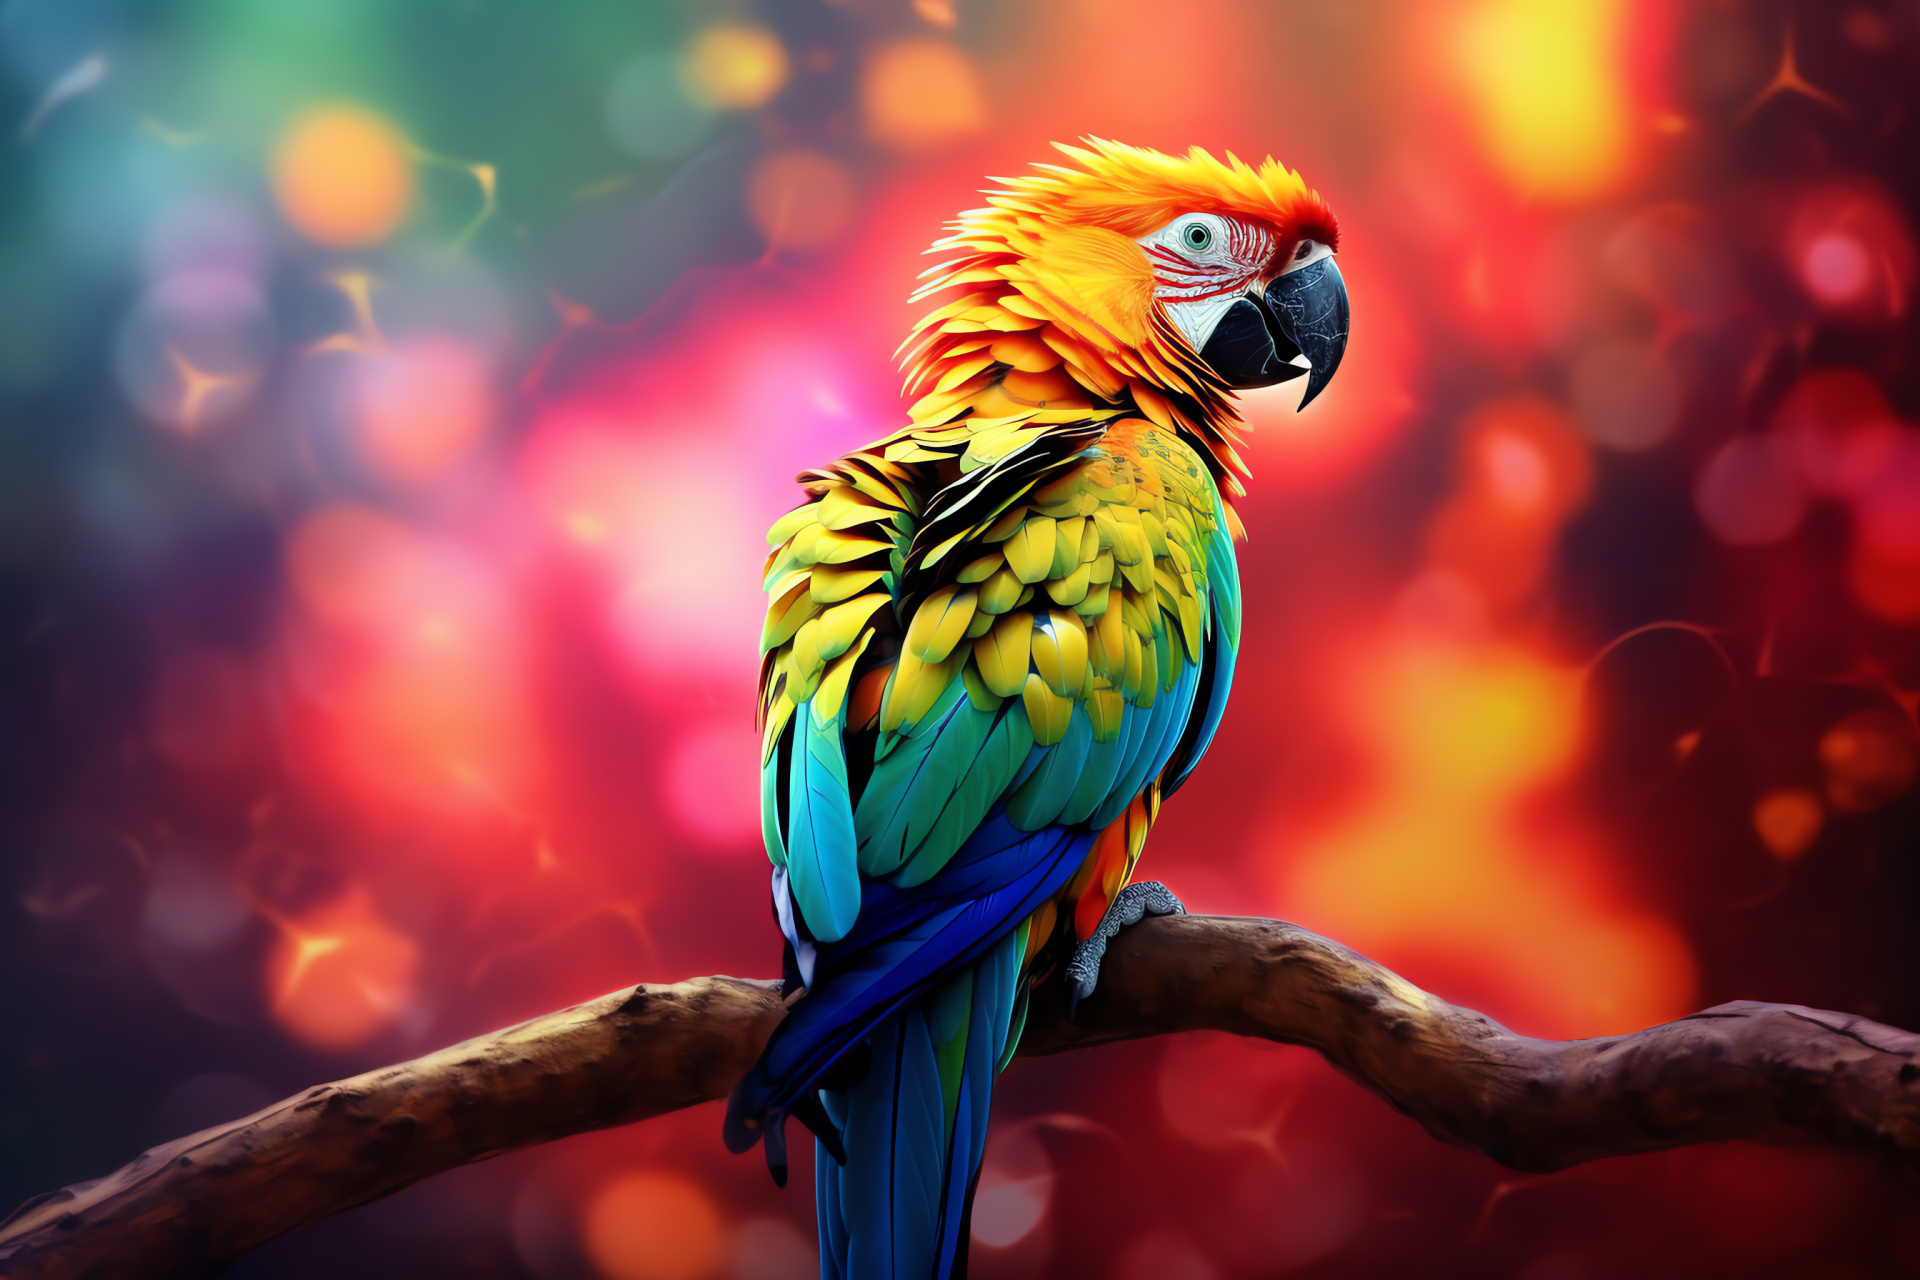 Exotic bird perched, Parrot vivid plumage, Flora color mix, Fauna swirl patterns, HD Desktop Image